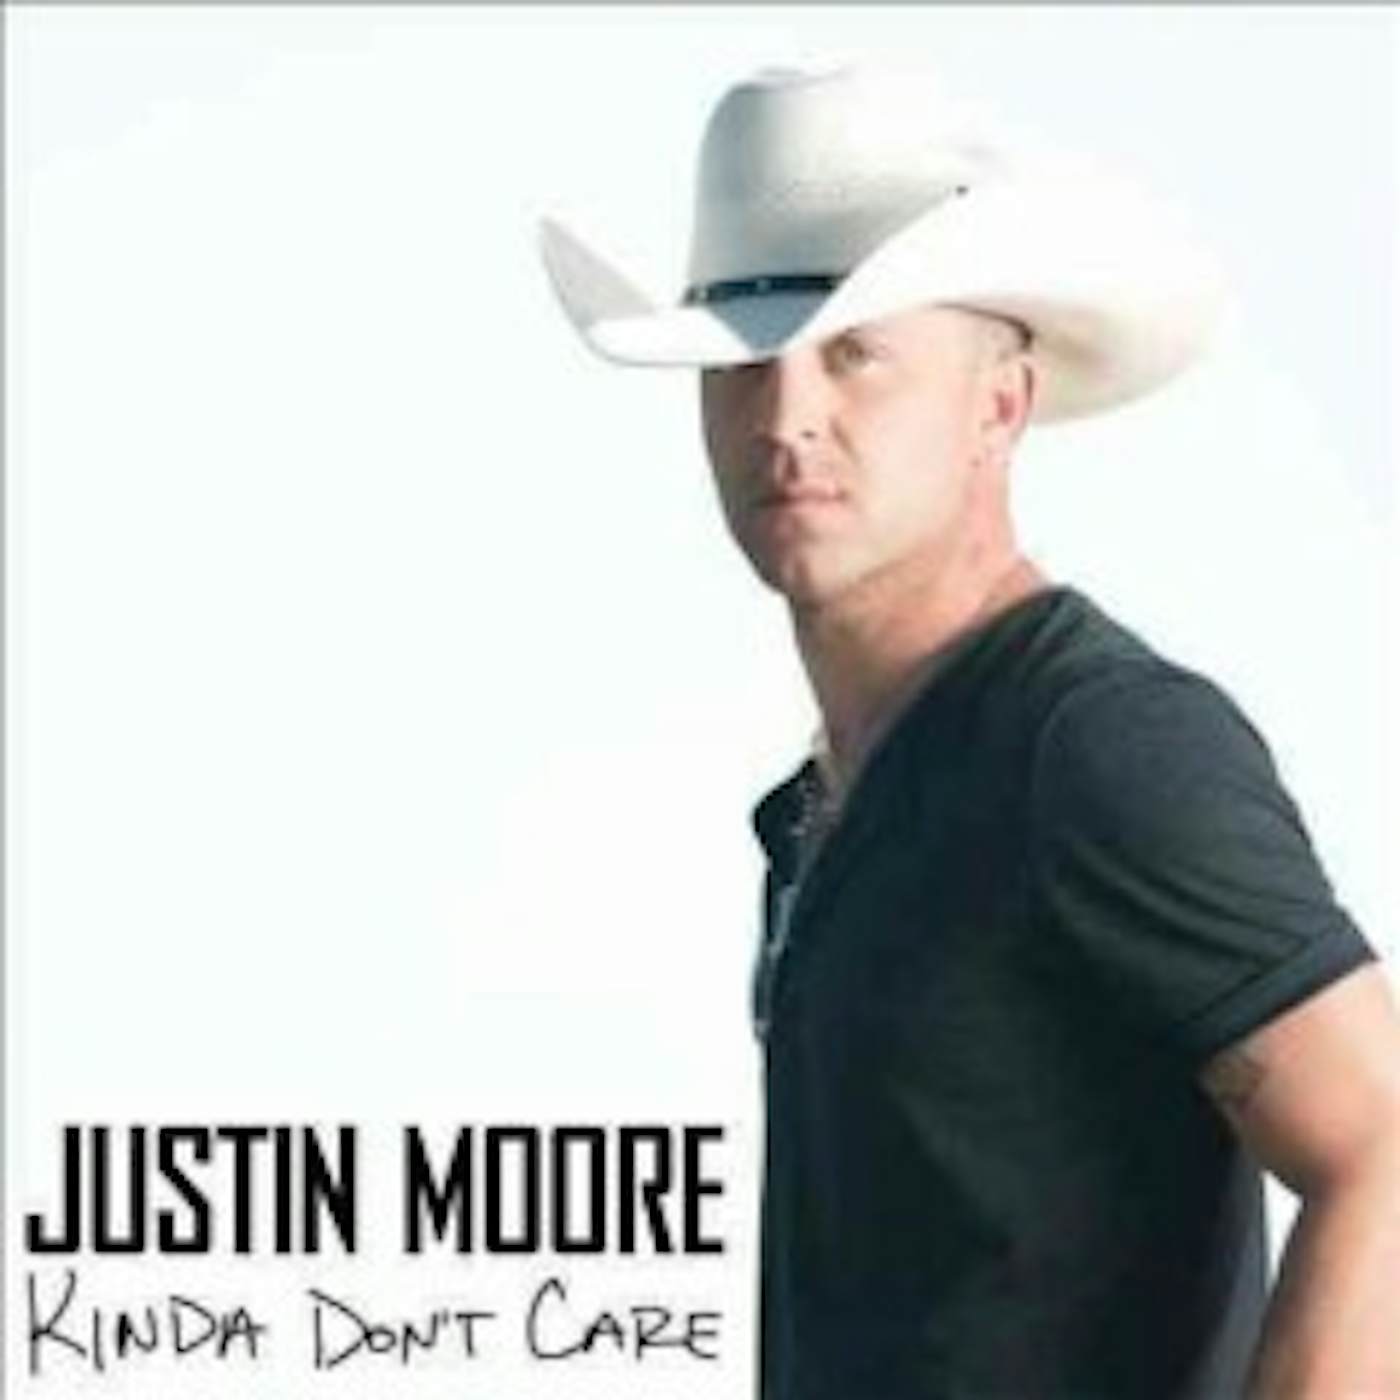 Justin Moore KINDA DON'T CARE CD